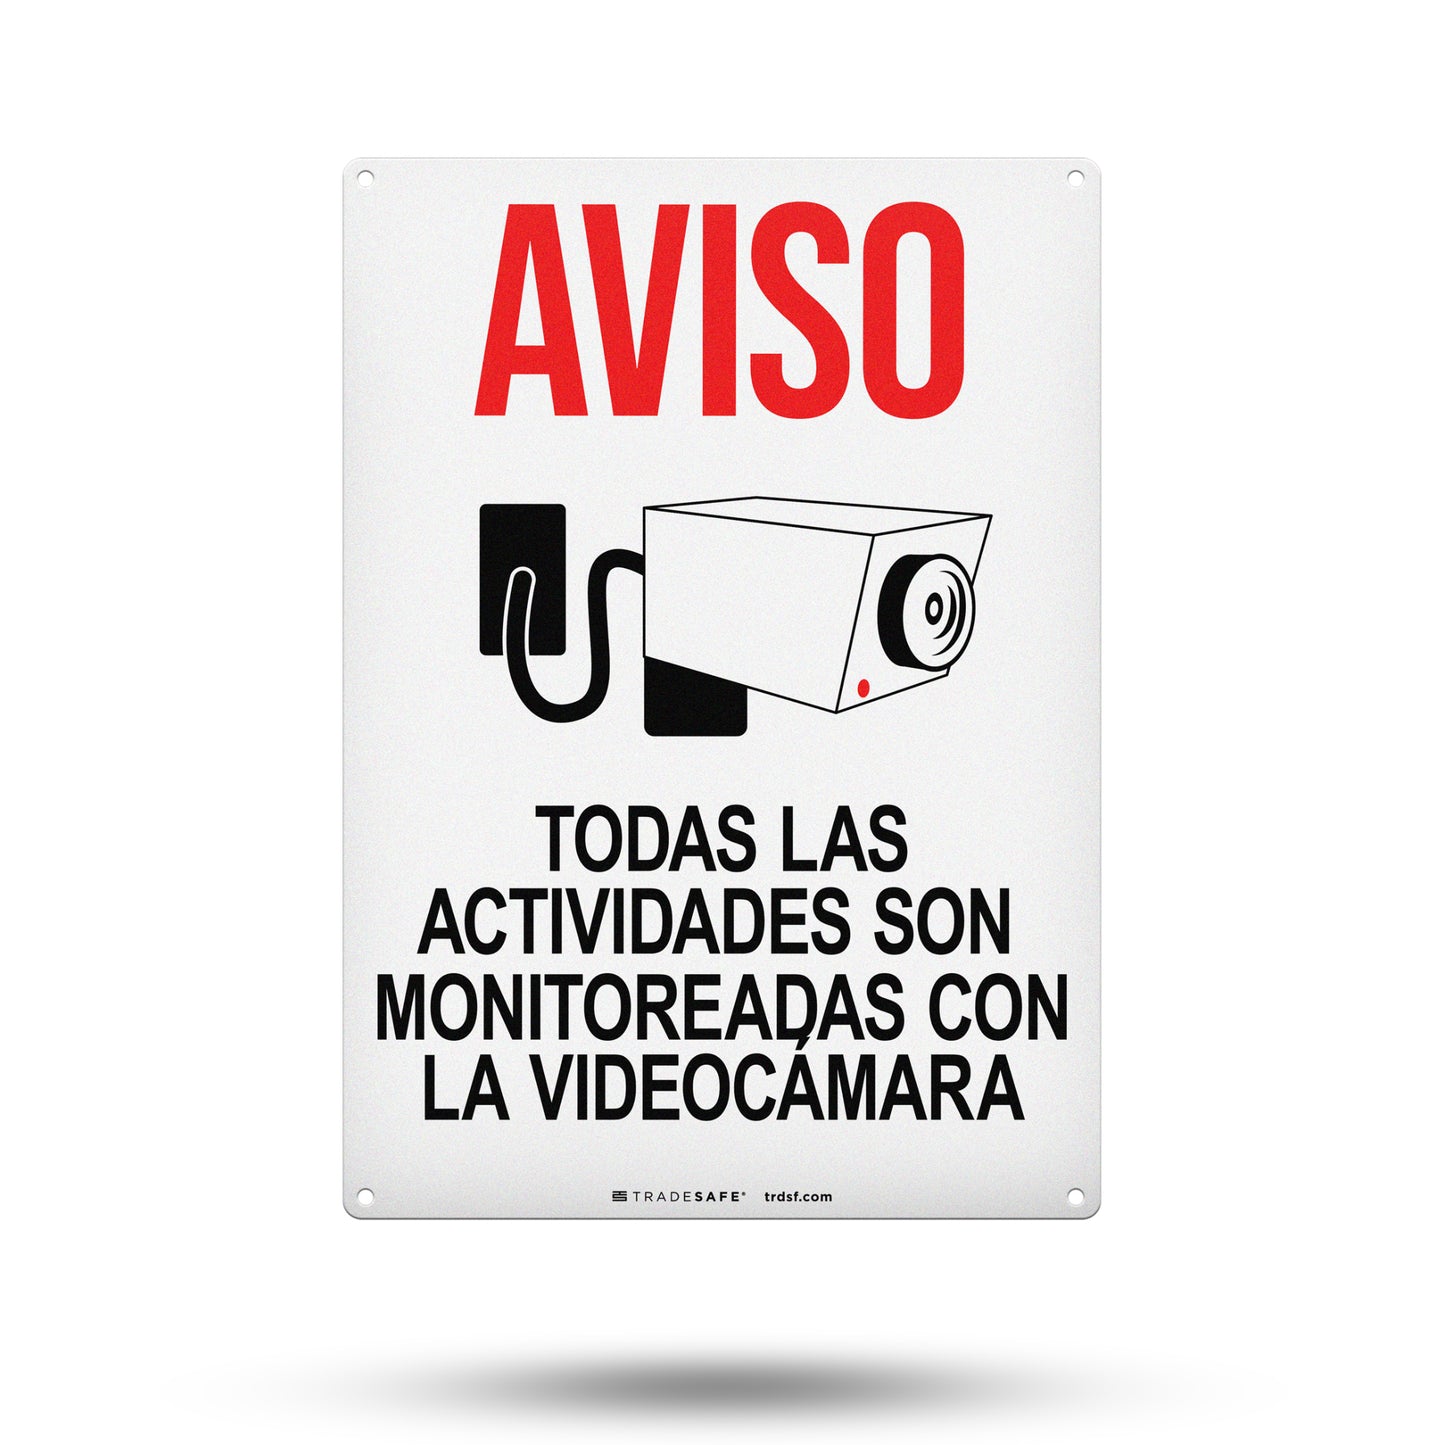 video surveillance sign in spanish